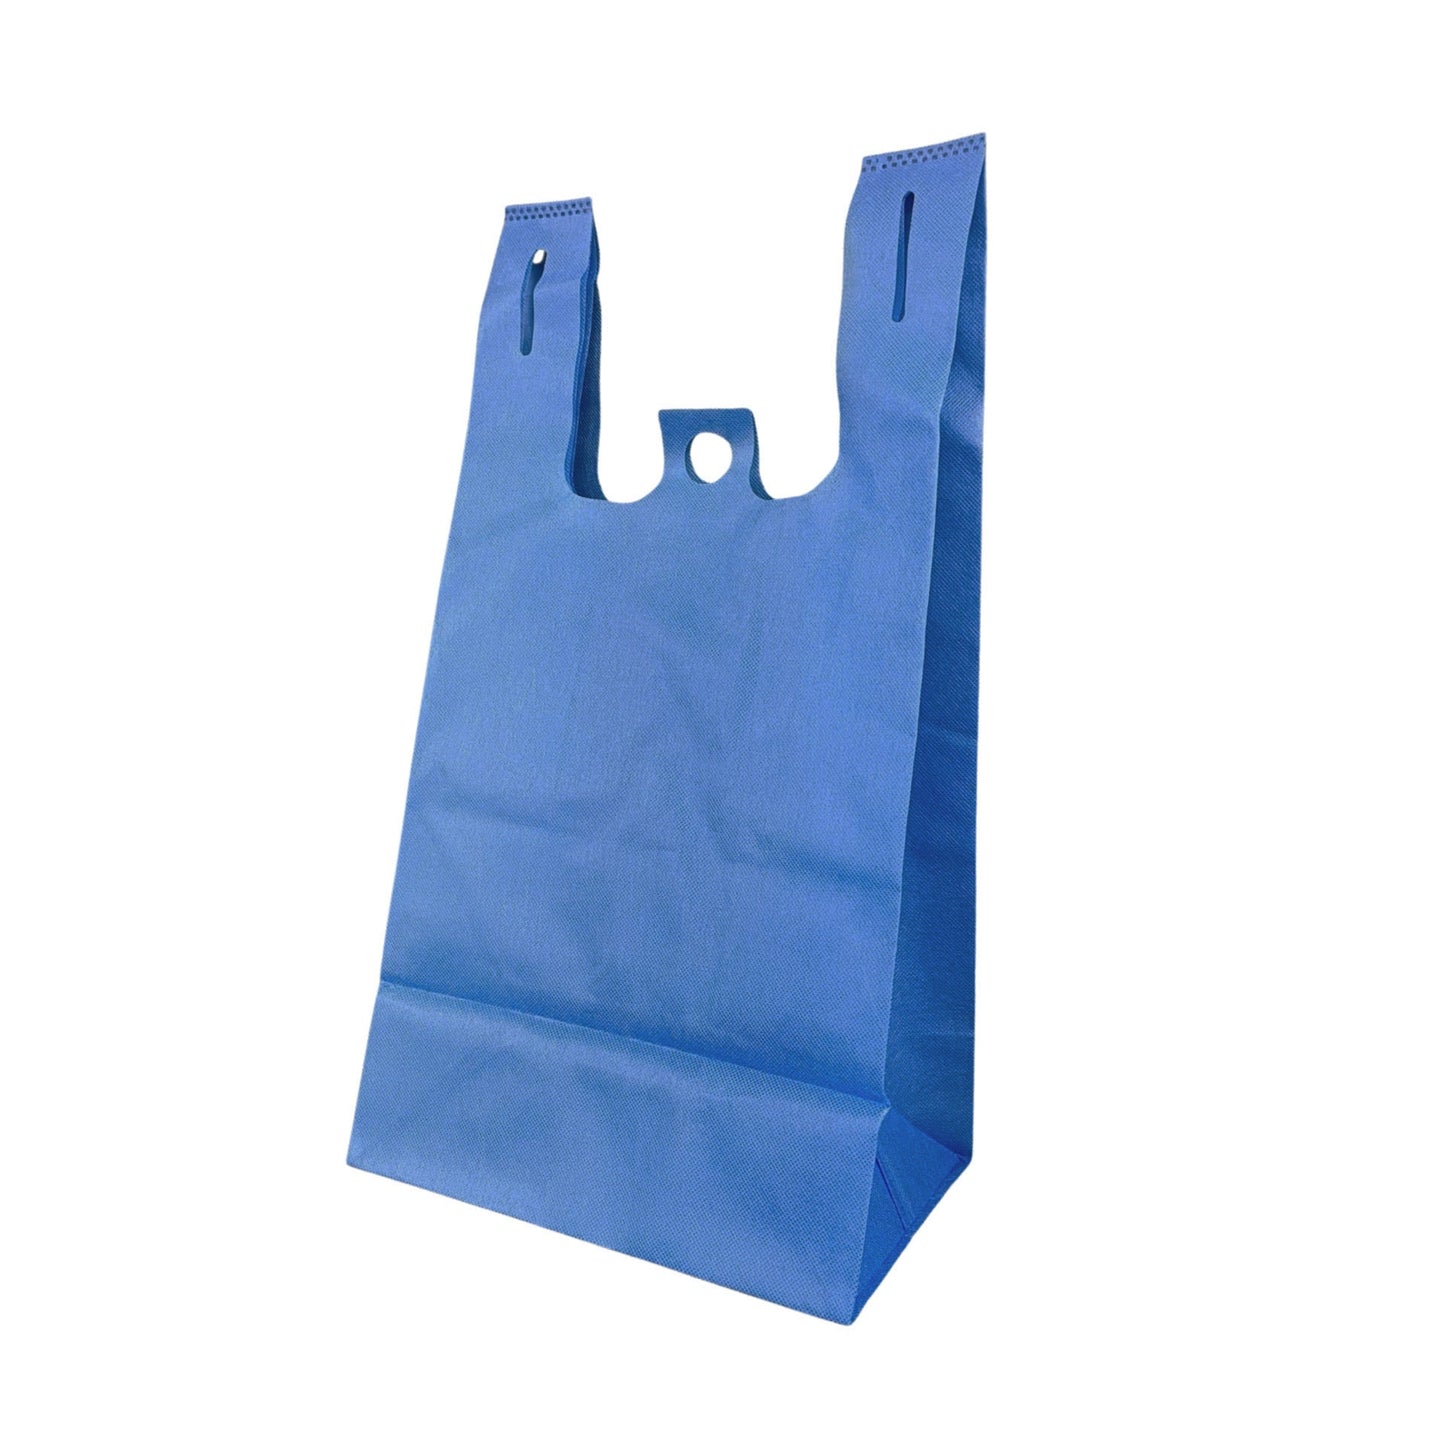 200pcs Non-Woven Reusable T-Shirt Bag 12x7x22x7 inches Blue Shopping Bags Square Bottom; $0.44/bag